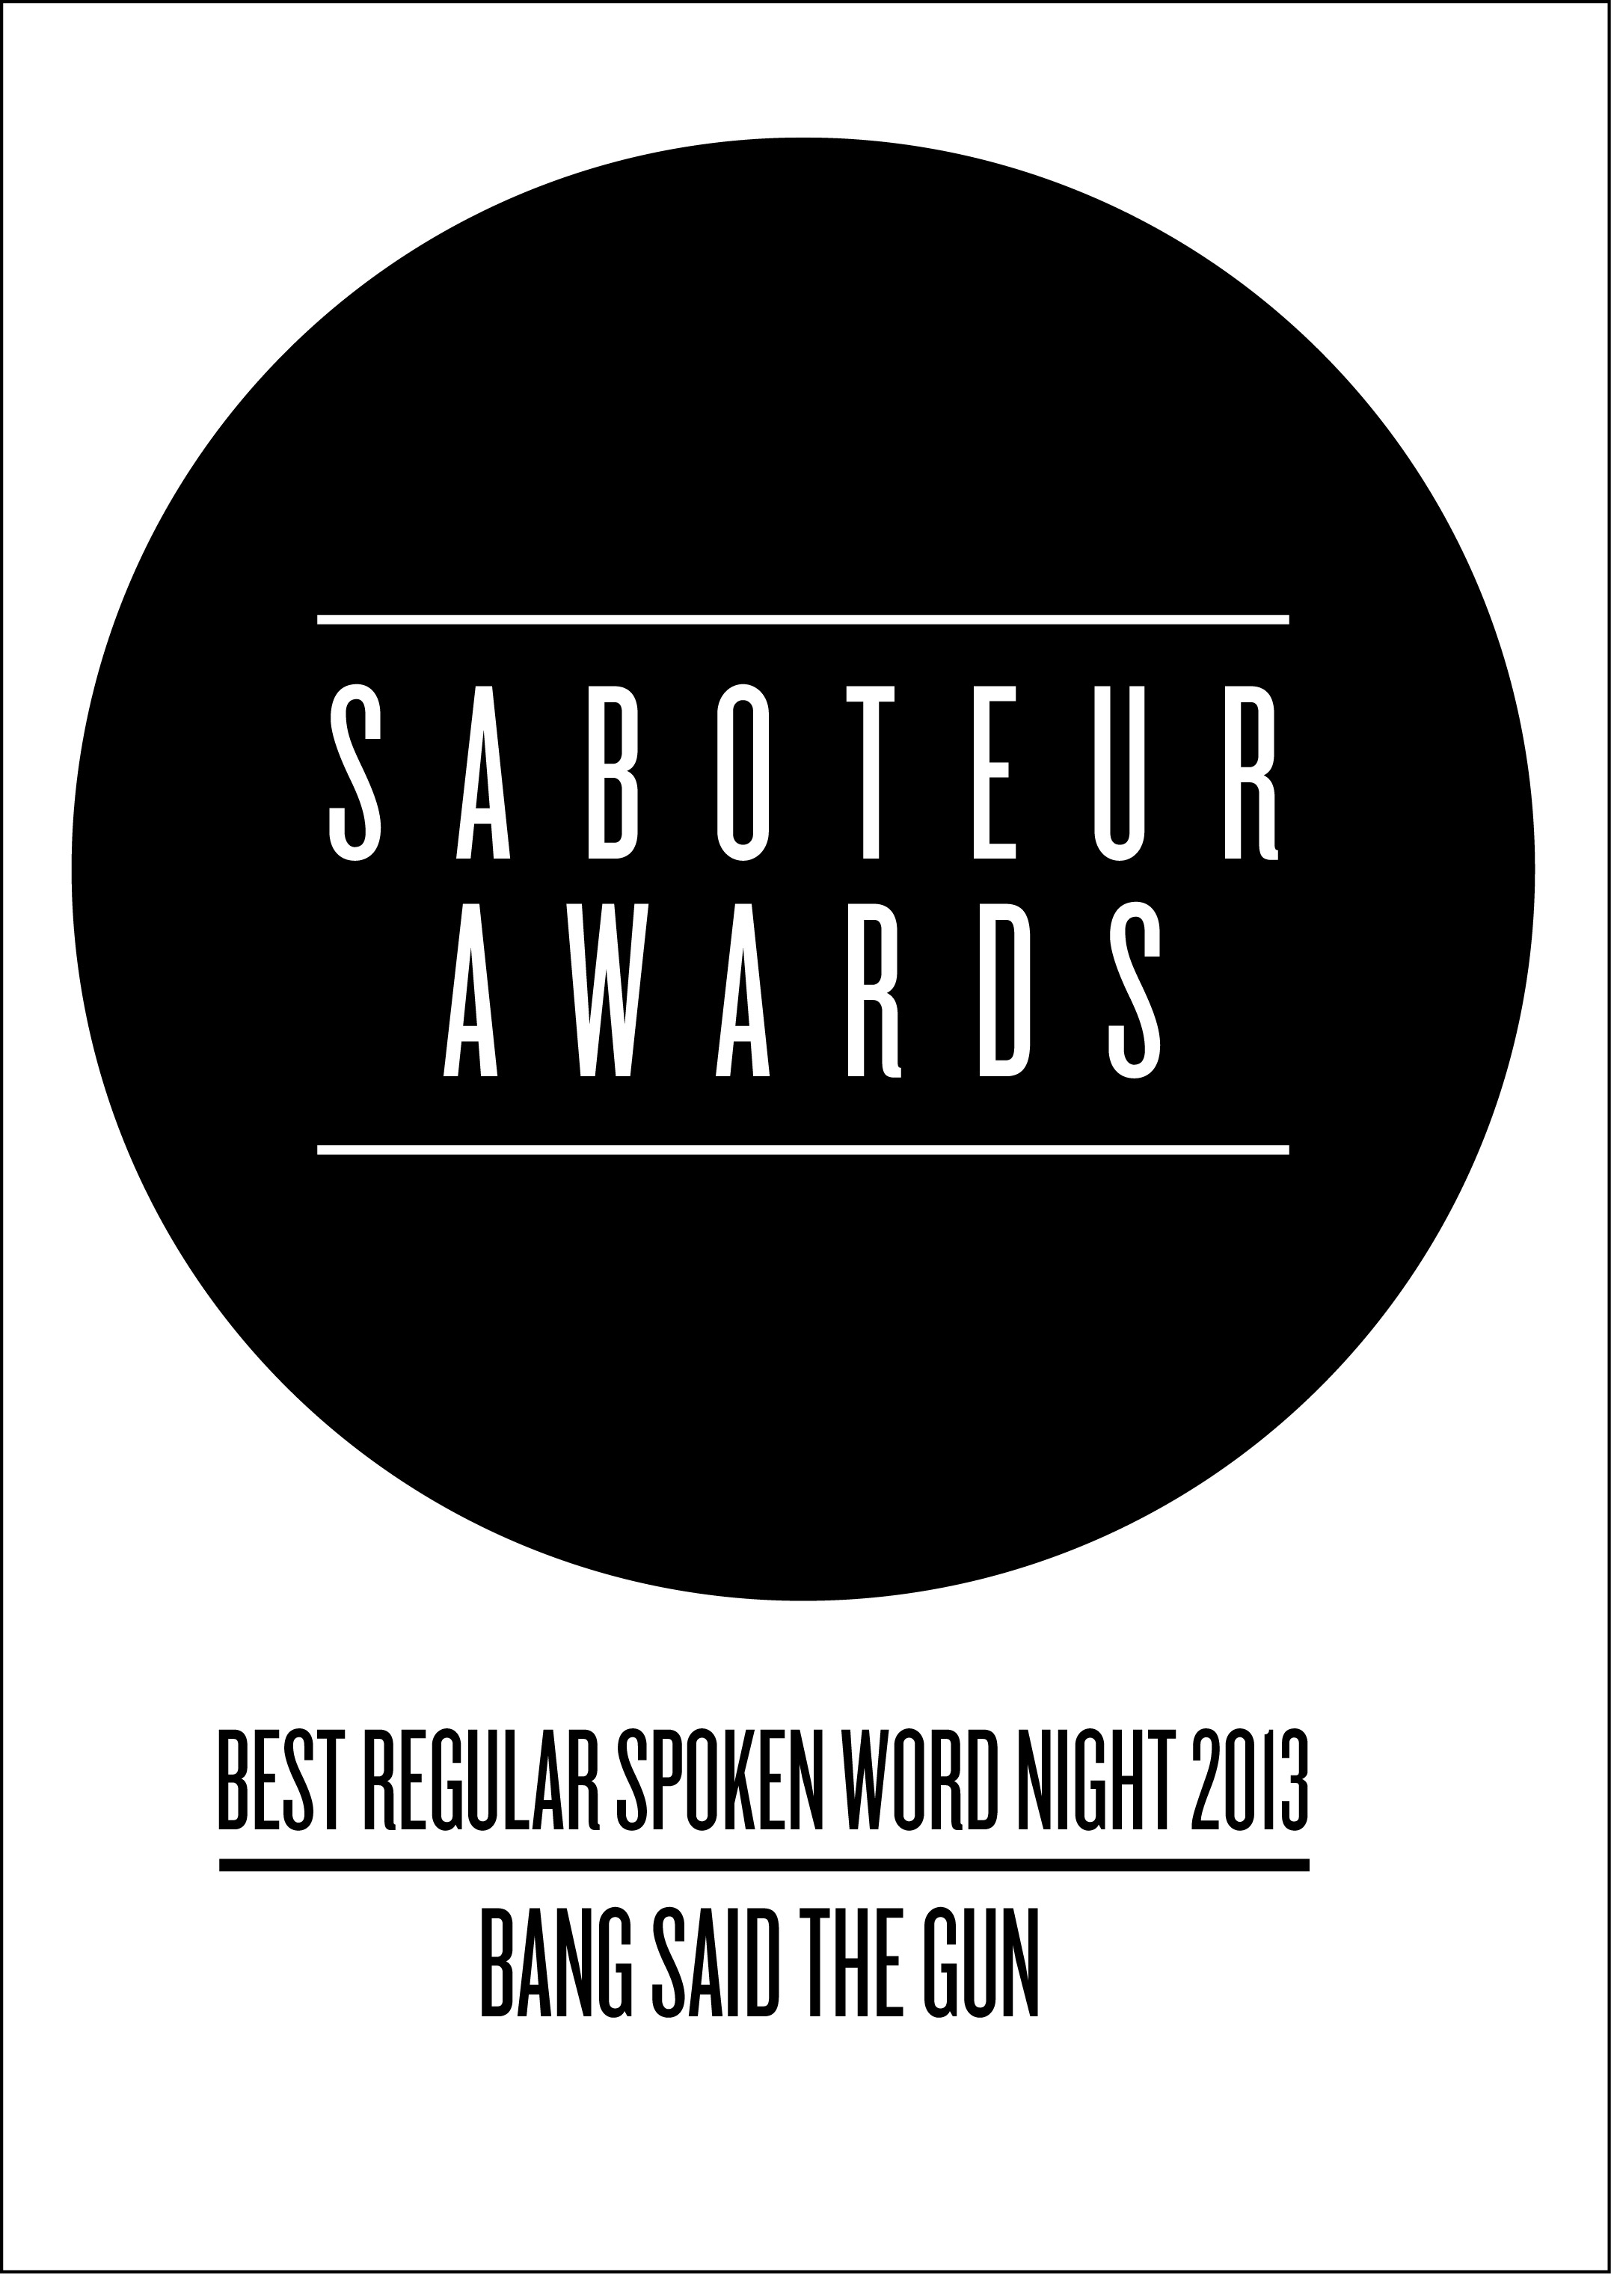 saboteur awards - regular spoken word night